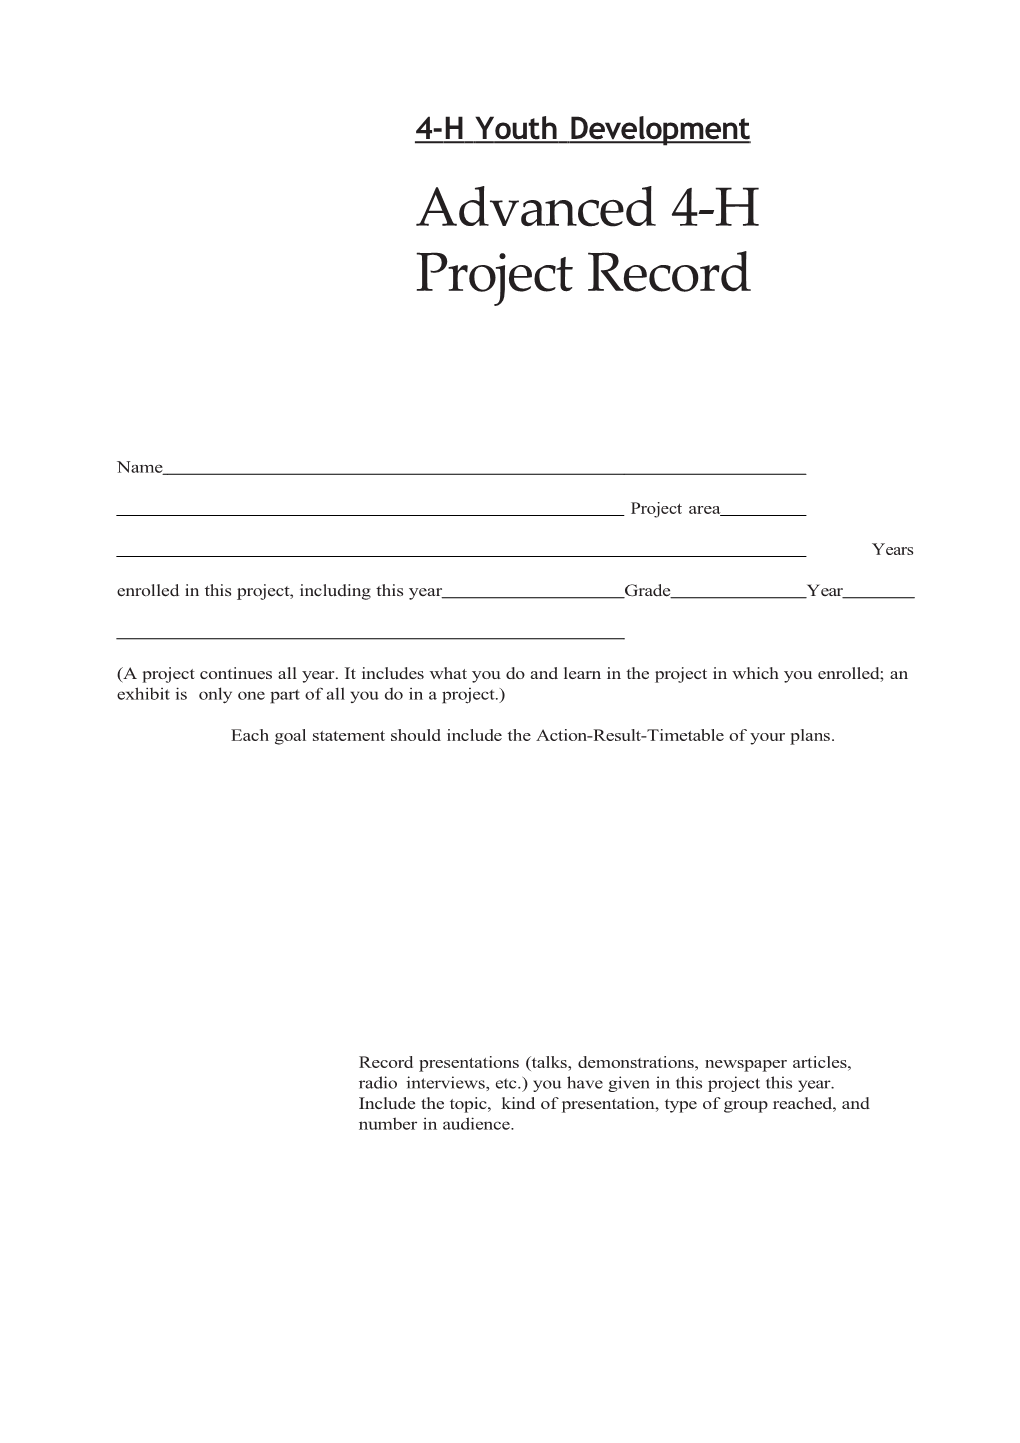 Advanced 4-H Project Record